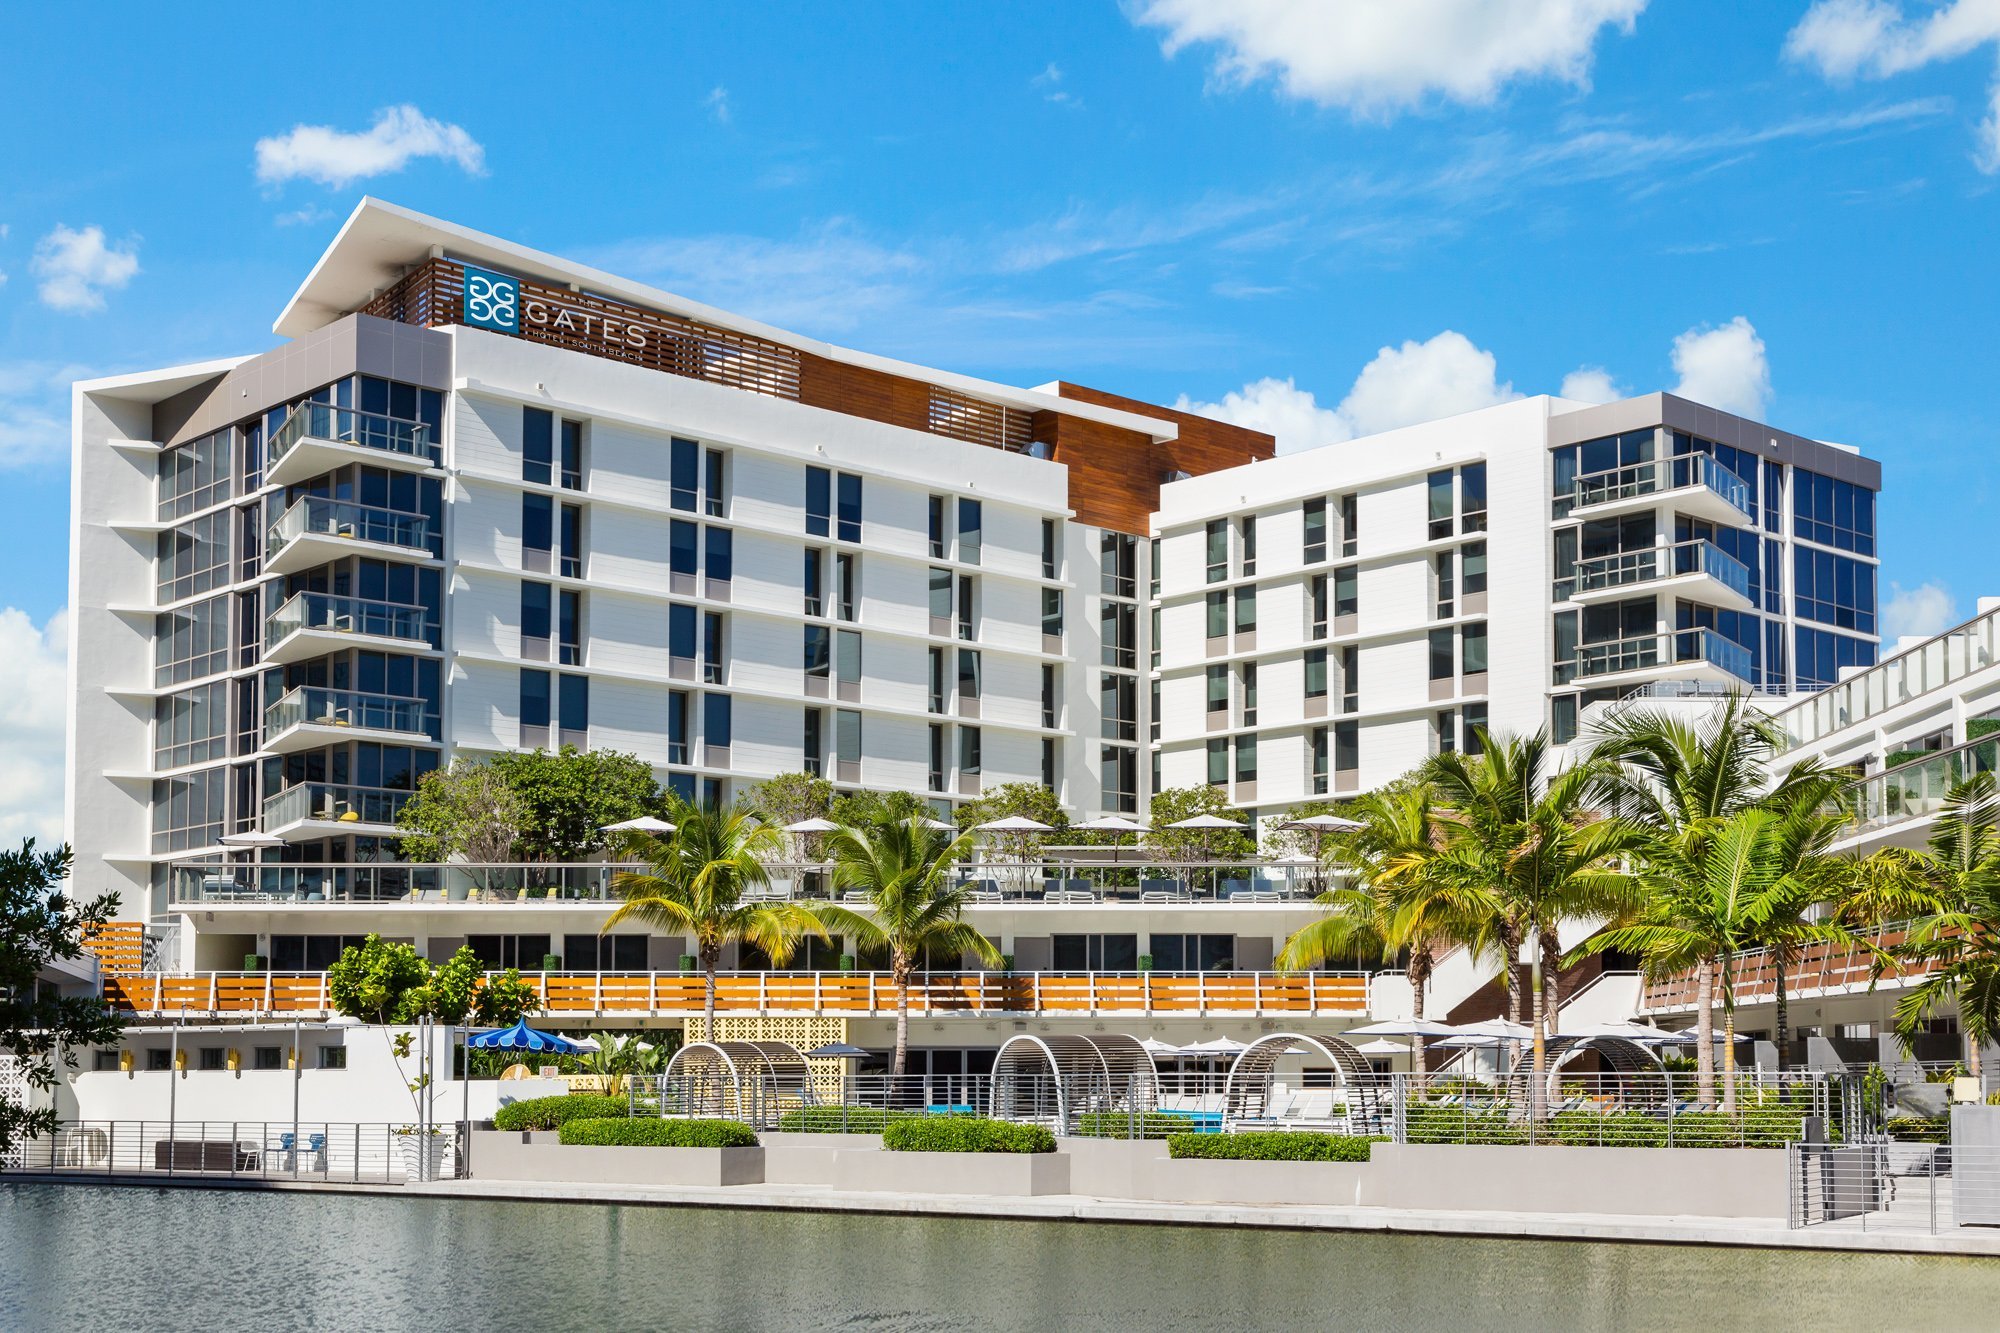 Photo of The Gates Hotel South Beach - A DoubleTree by Hilton, Miami Beach, FL